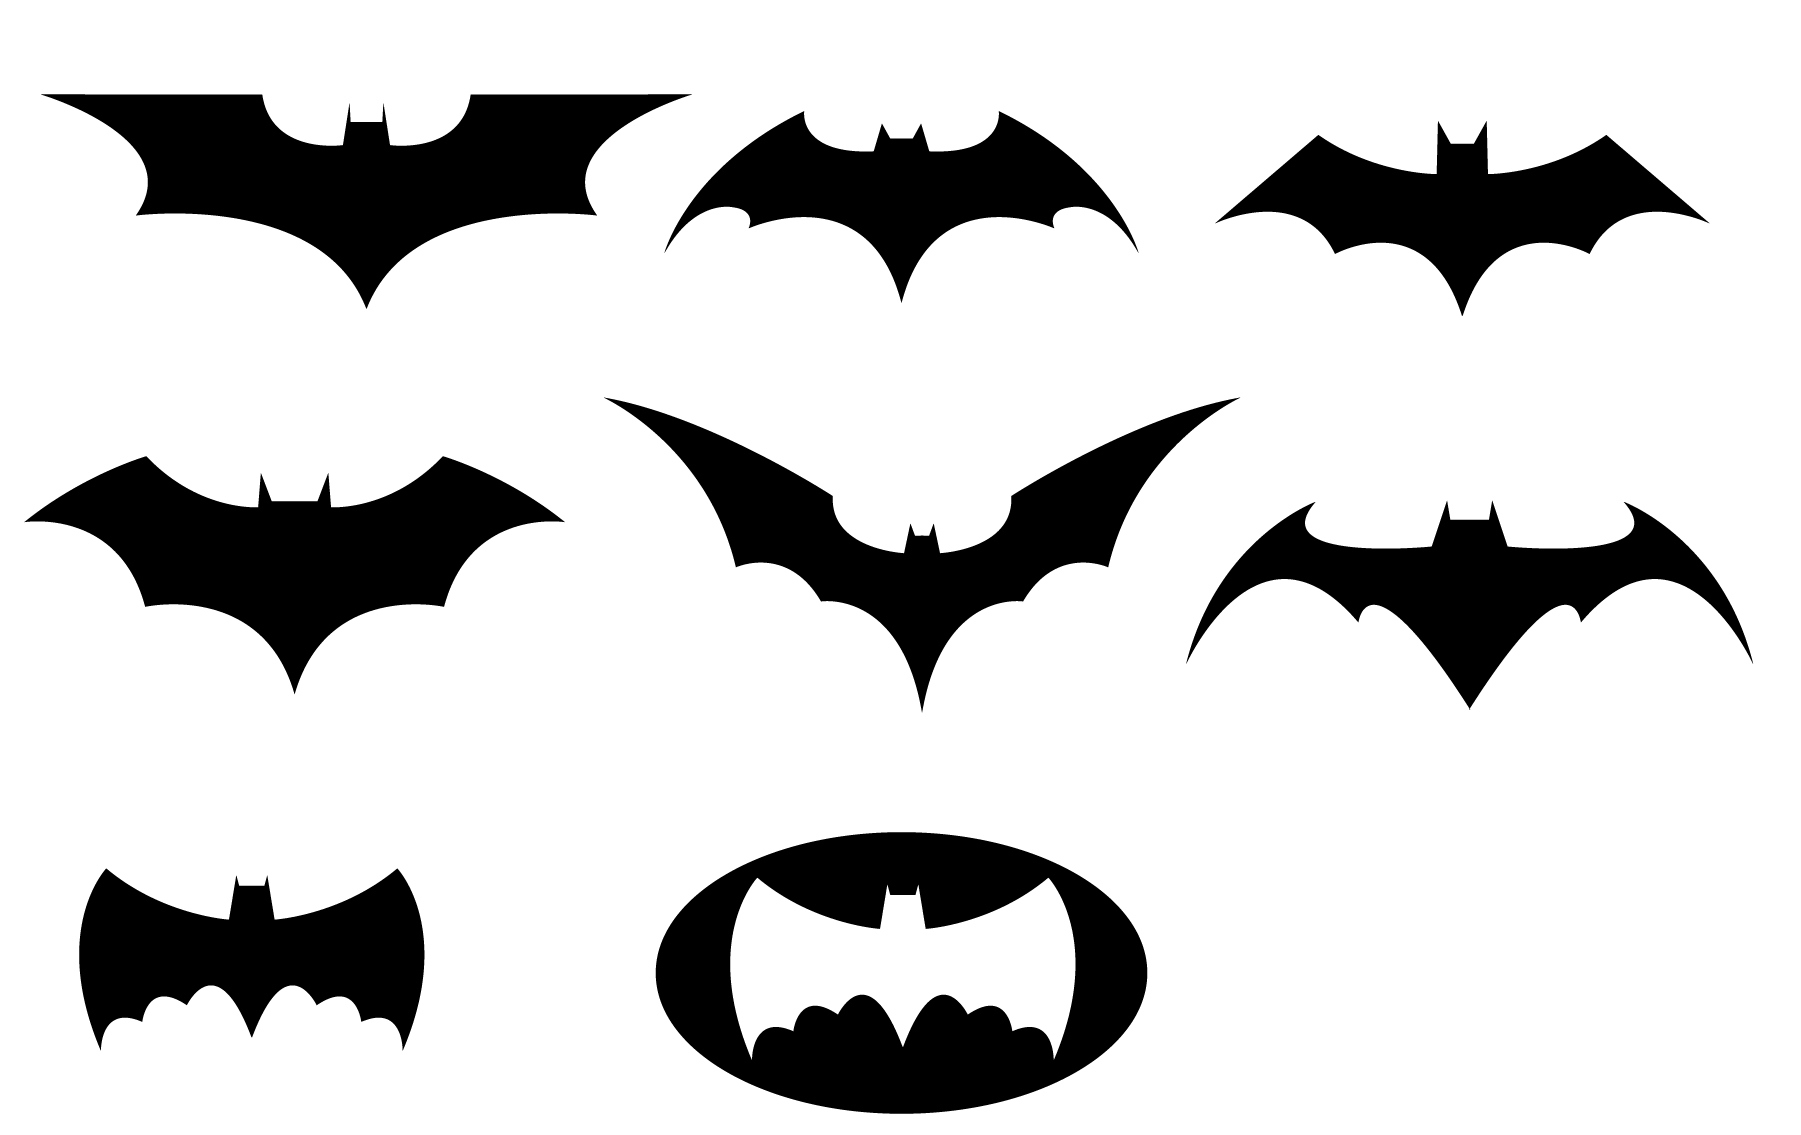 Batman Logo Printable - Clipart library